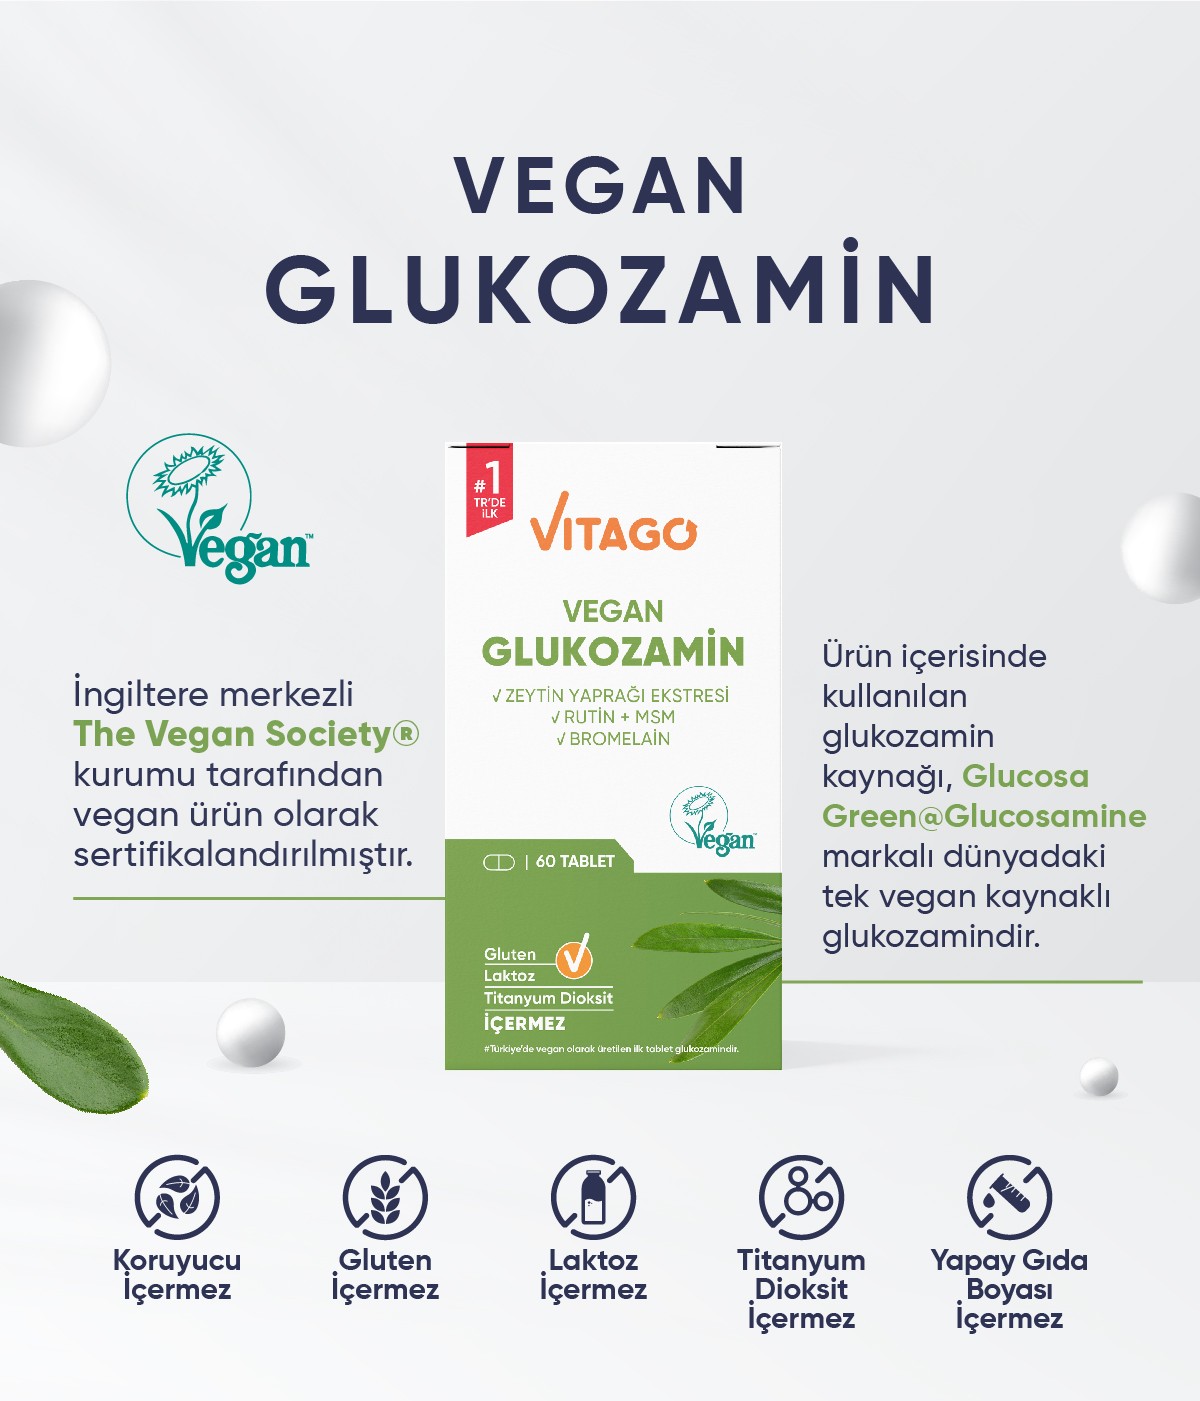 Vitago Premium Vegan Glukozamin, Bromelain, Rutin İçeren 60 Tablet